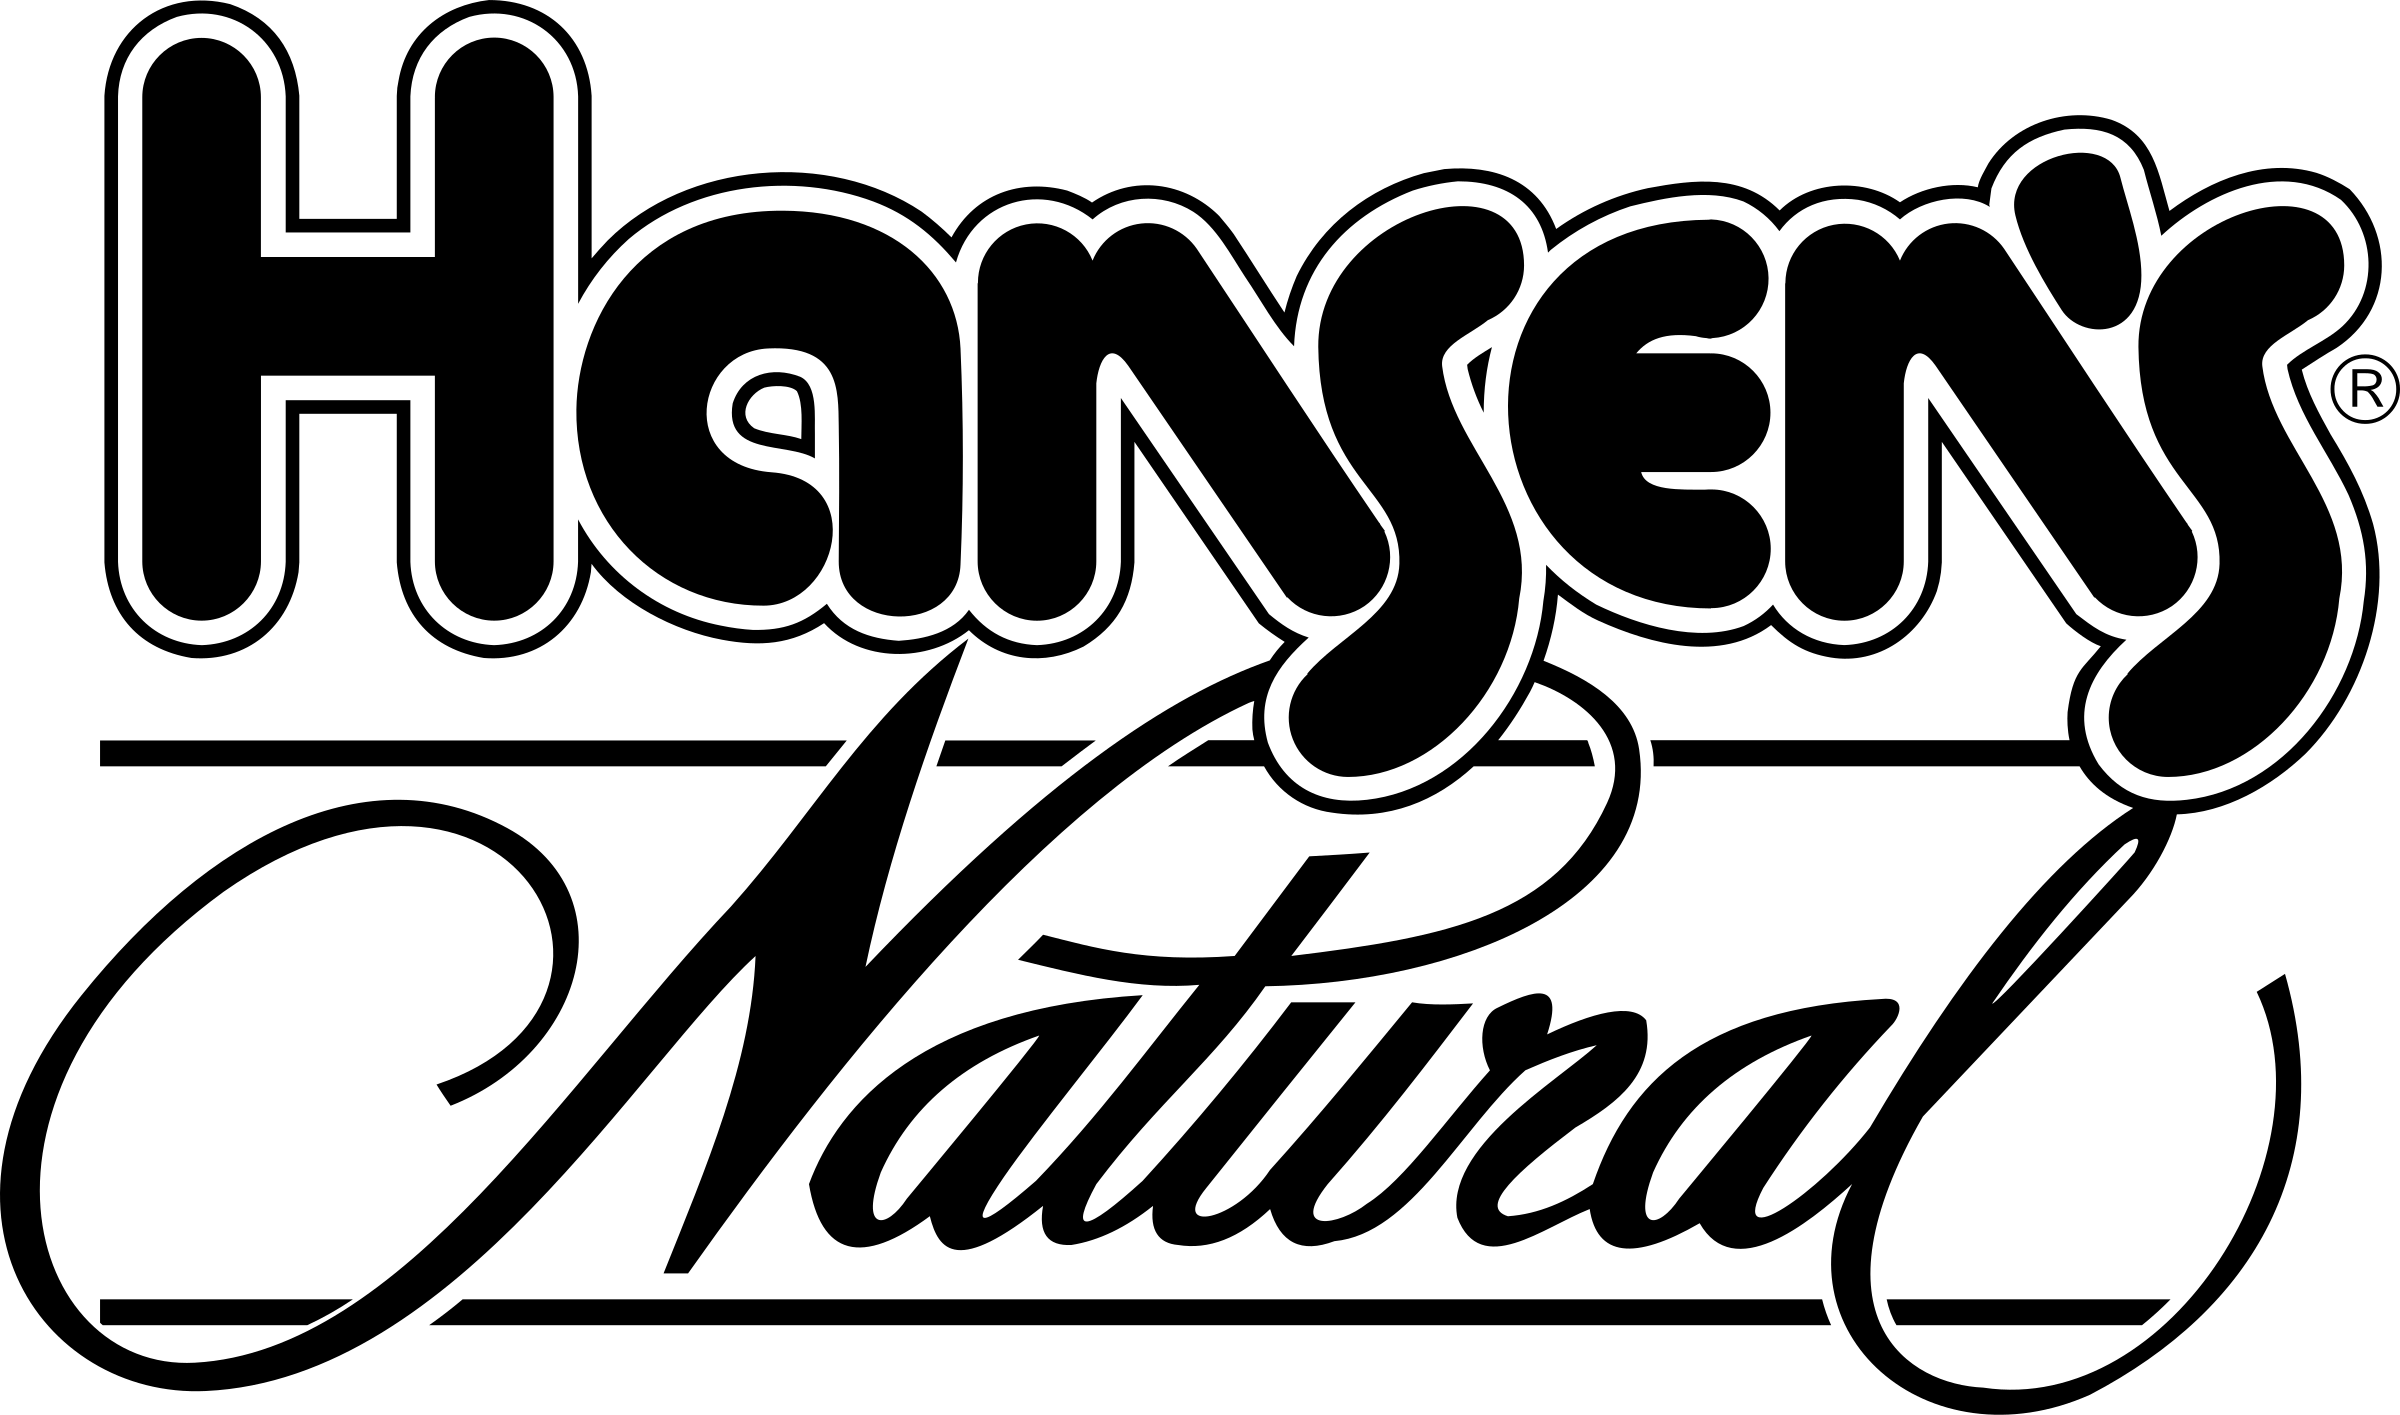 Hansen's Logo - Hansen's Logo PNG Transparent & SVG Vector - Freebie Supply